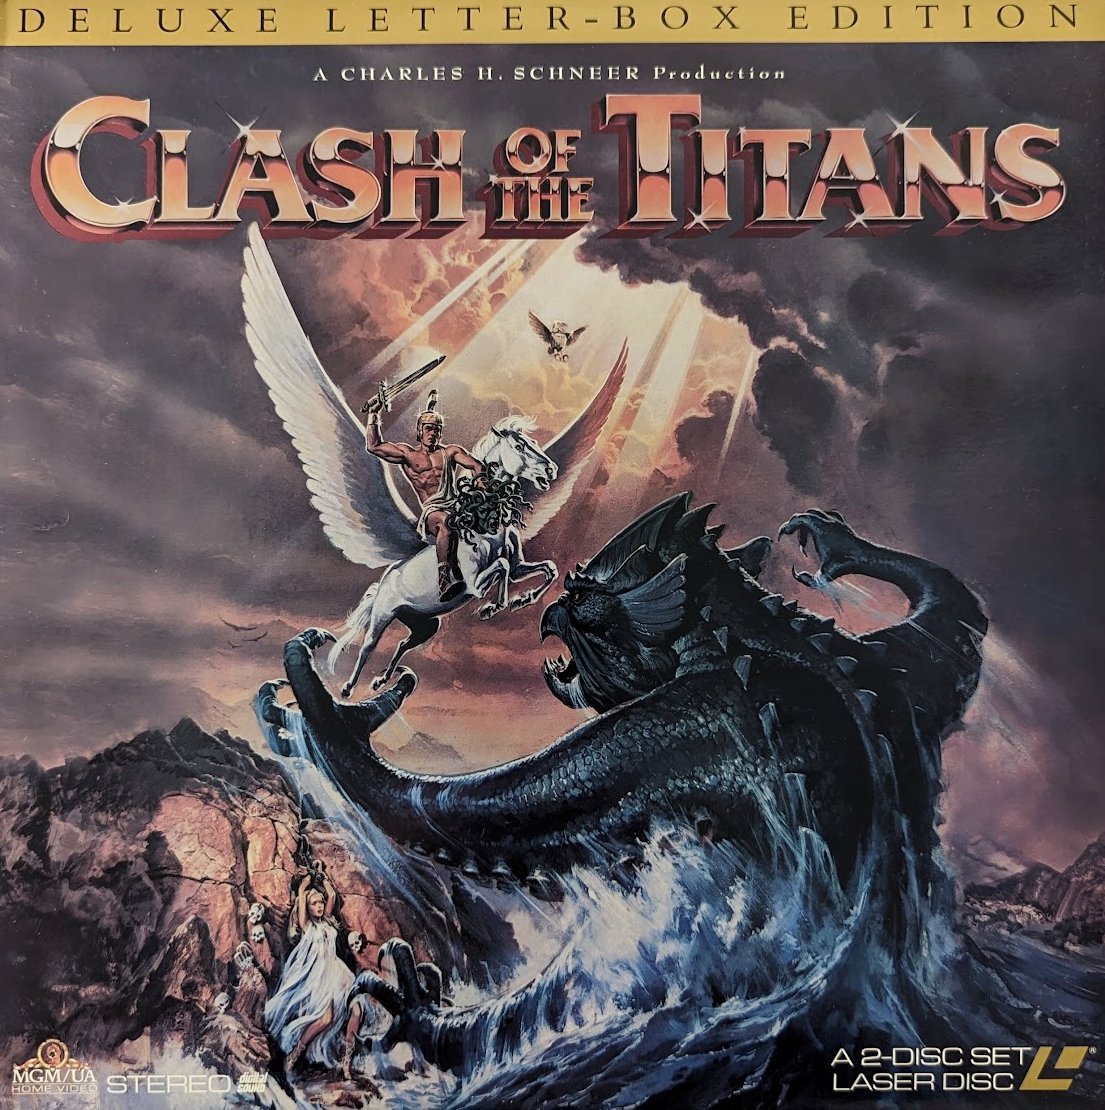 Image of Le choc des Titans: CLASH OF THE TITANS, 1981. ©MGM/courtesy